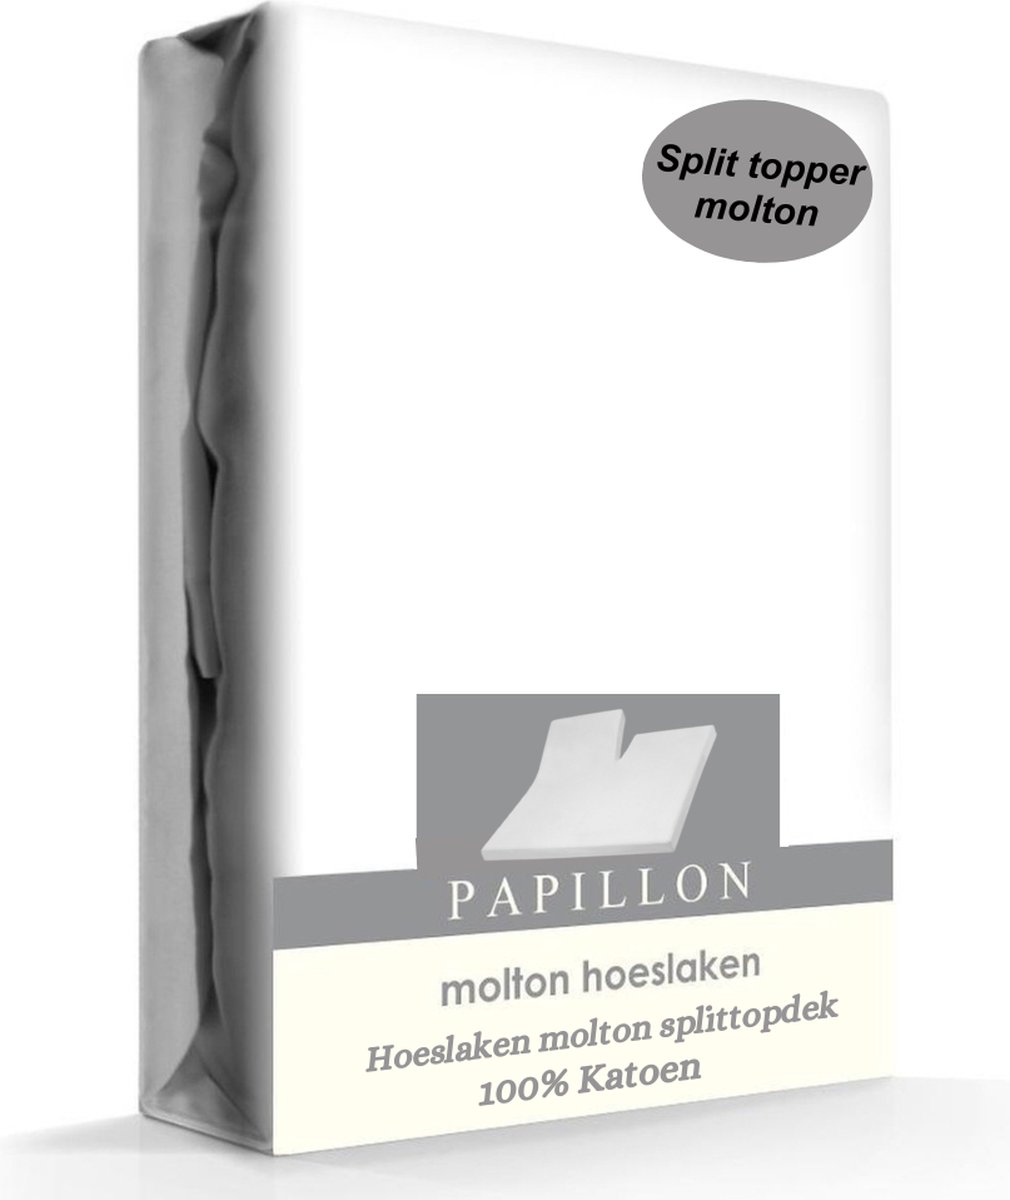 Papillon splittopdek hoeslaken - molton - katoen - 160 x 220